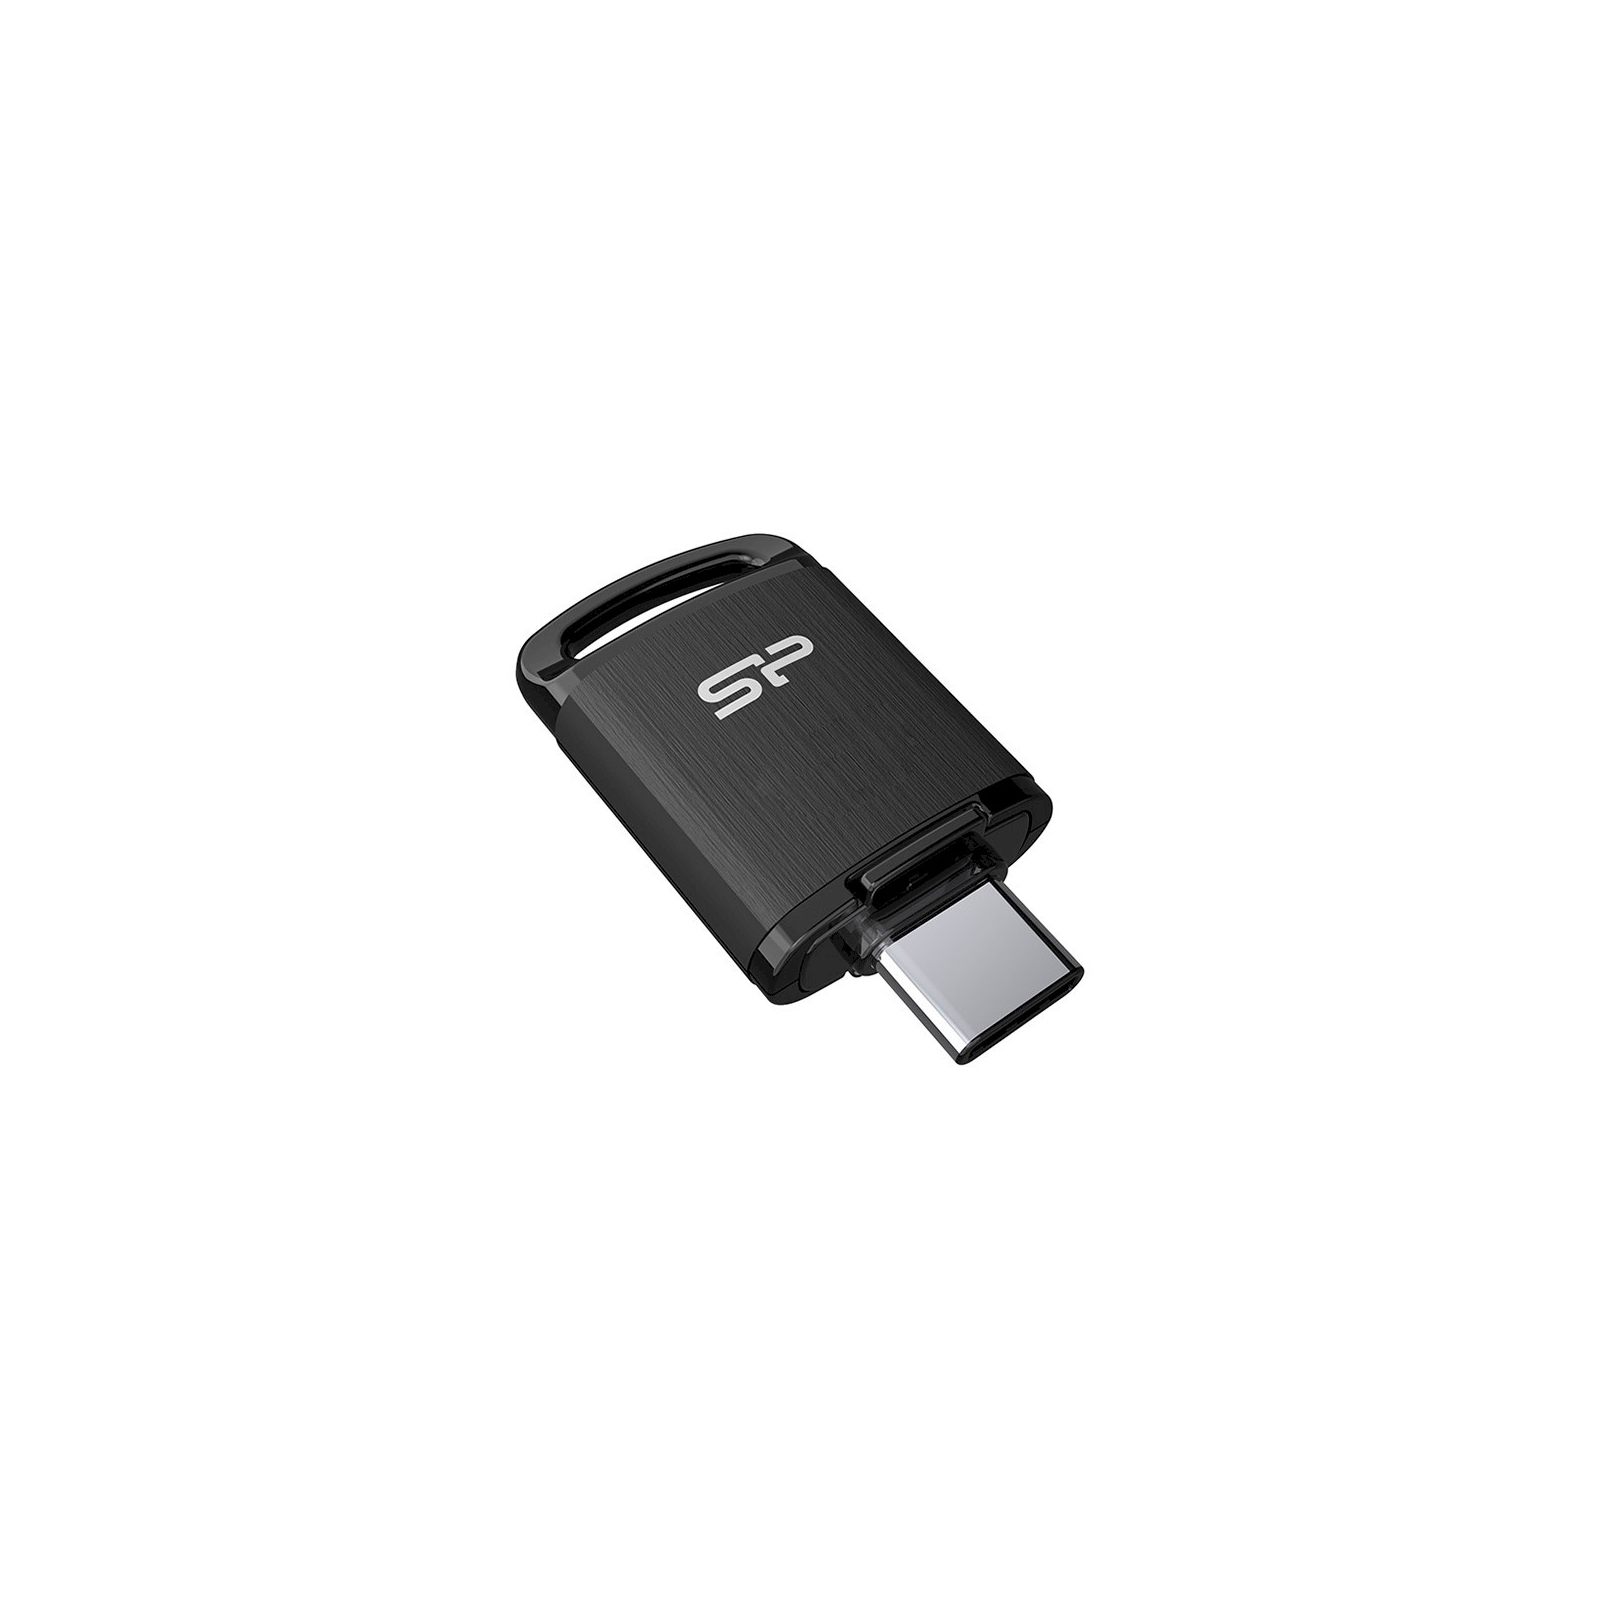 USB флеш накопитель Silicon Power 16GB Mobile C10 Black USB 3.1 (SP016GBUC3C10V1K) изображение 2